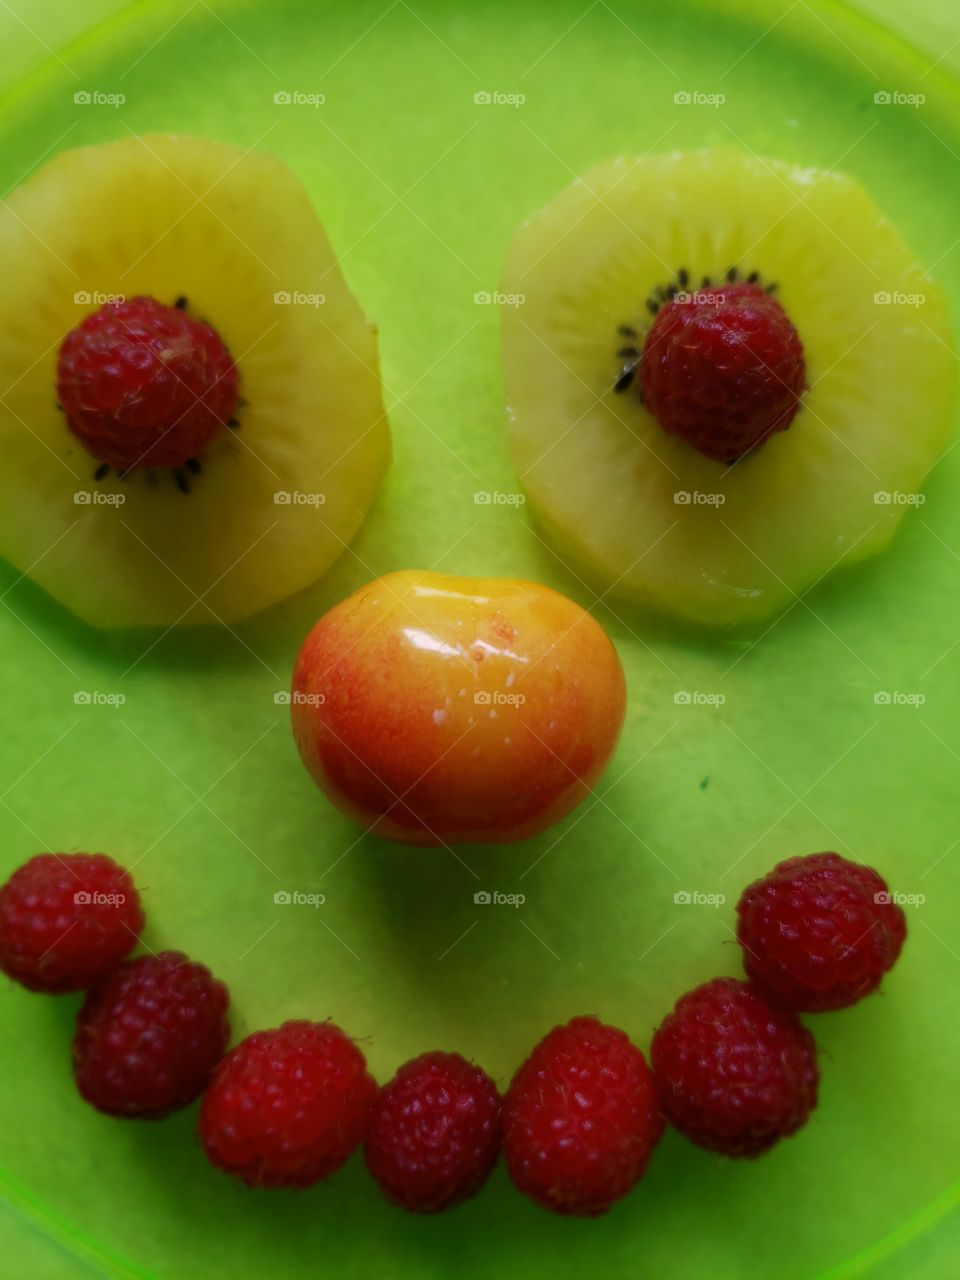 fruit face